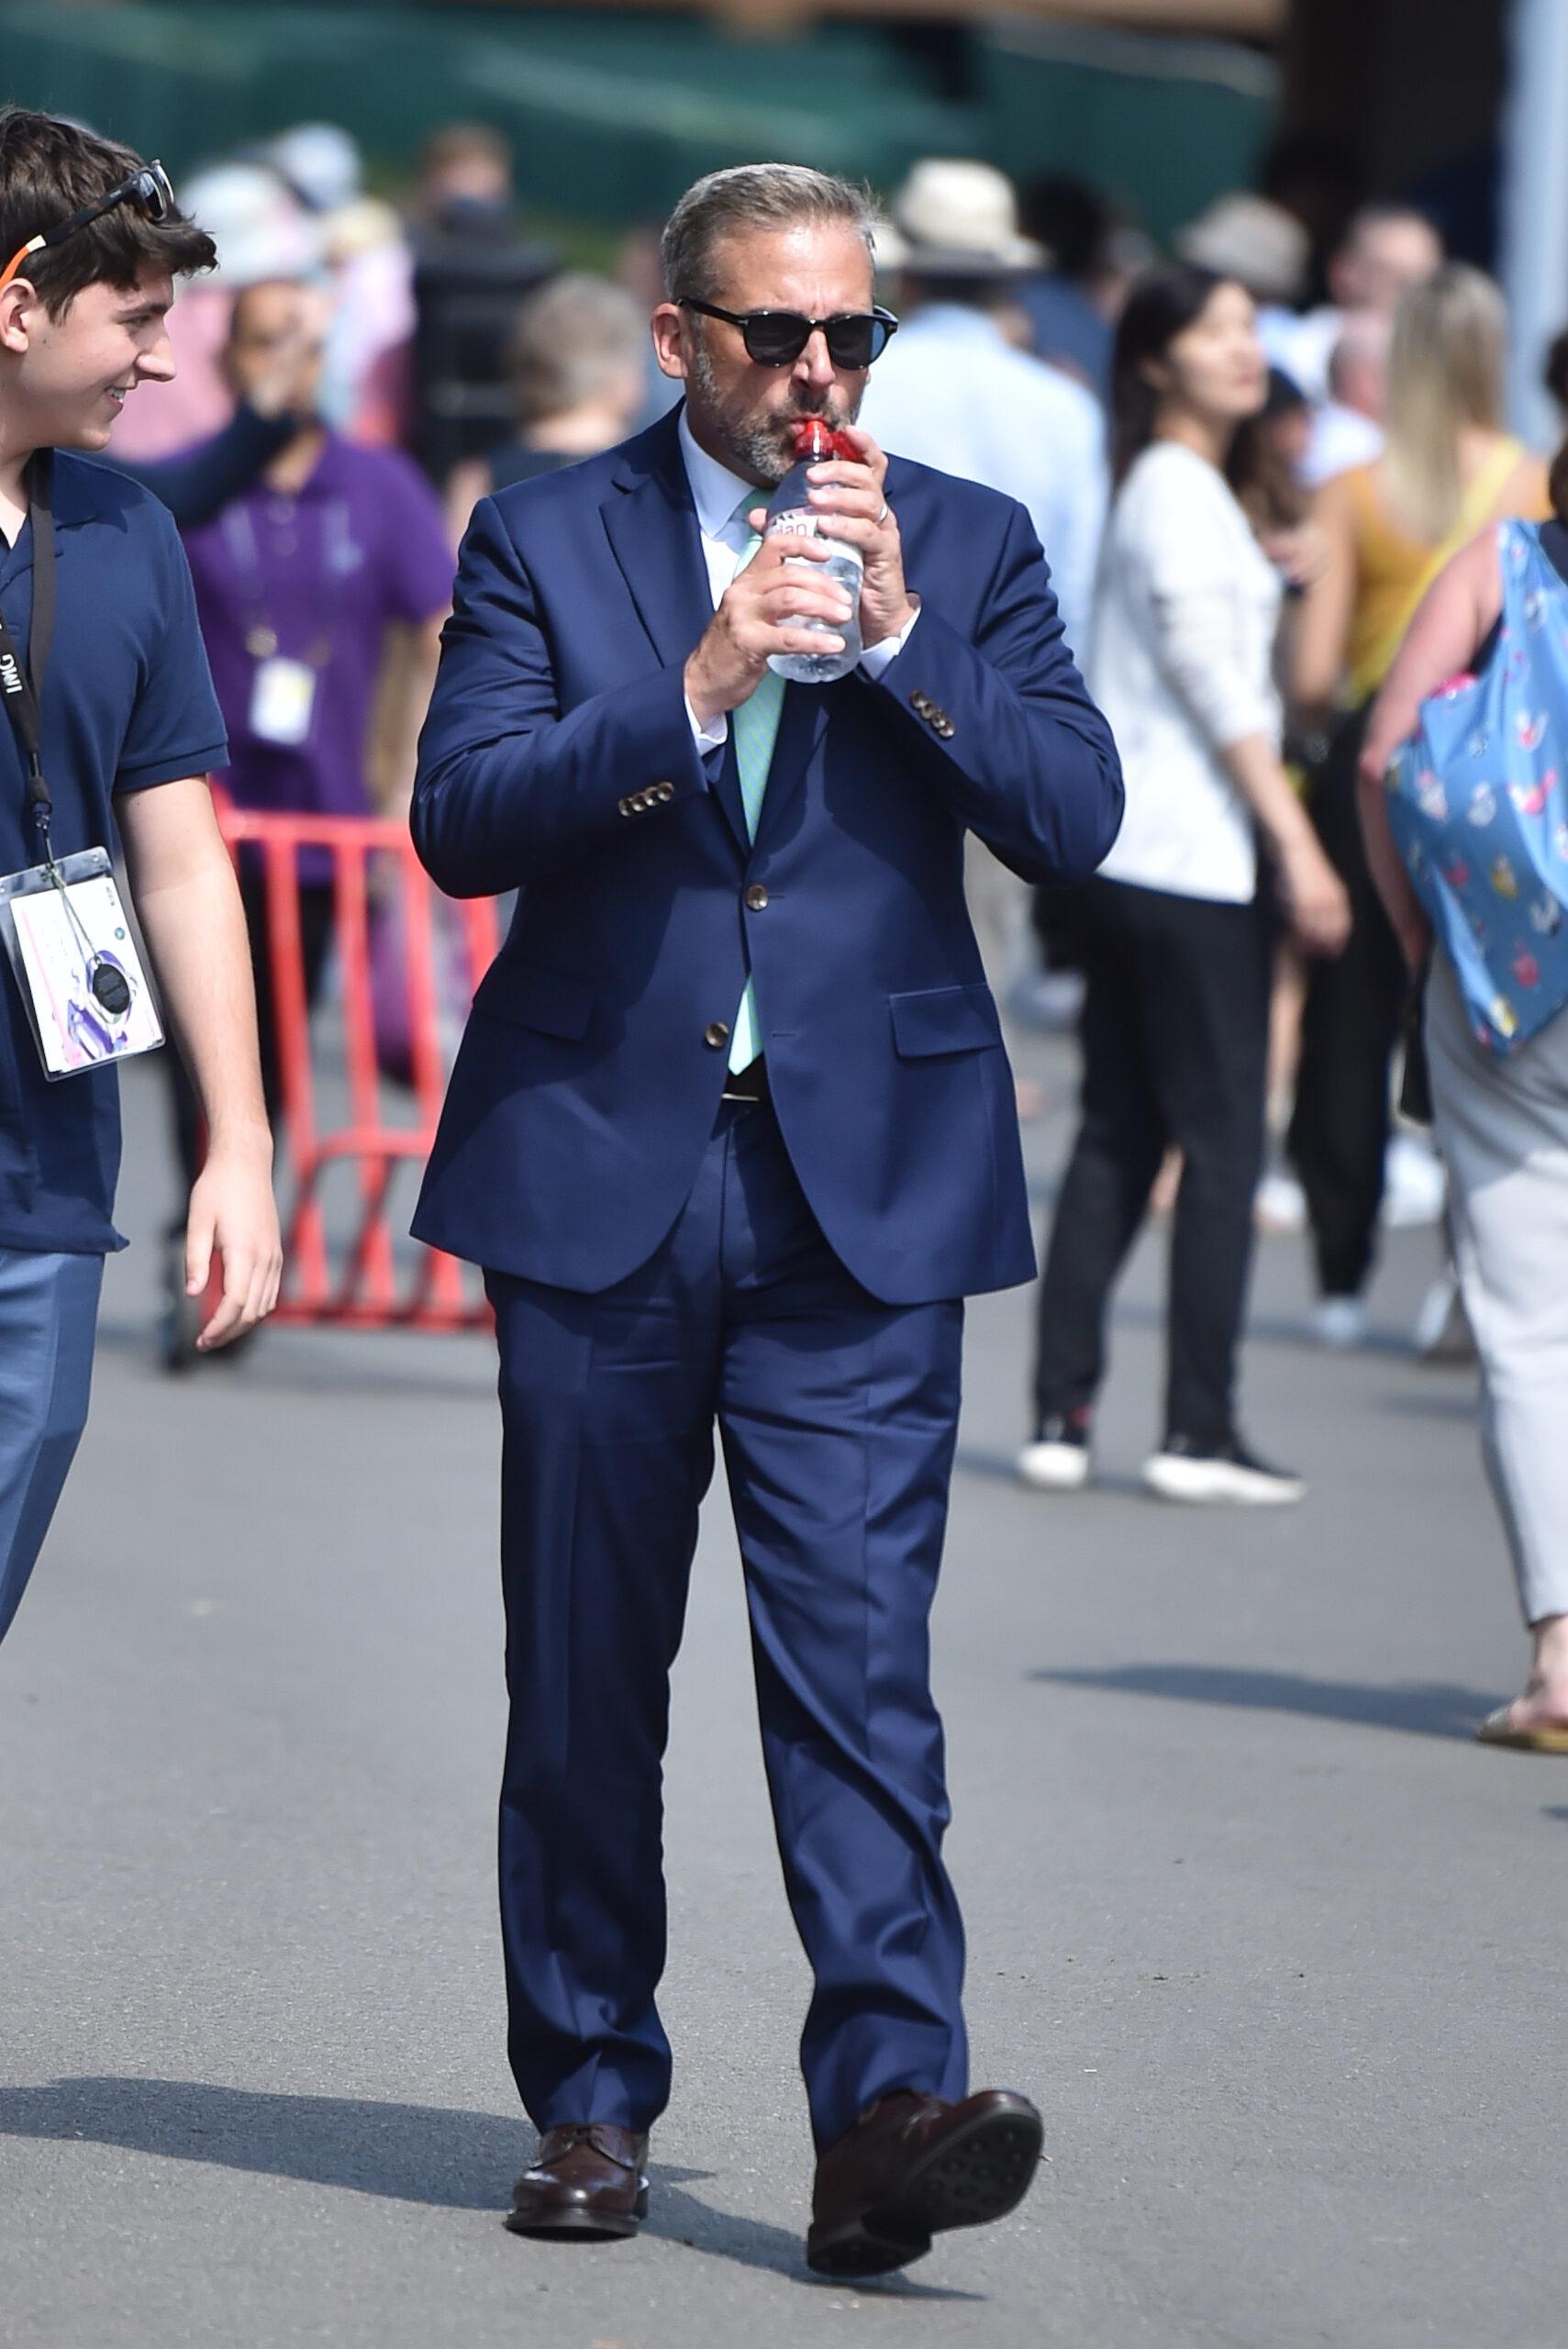 American Actor Steve Carell is seen at Wimbledon Tennis Day 11